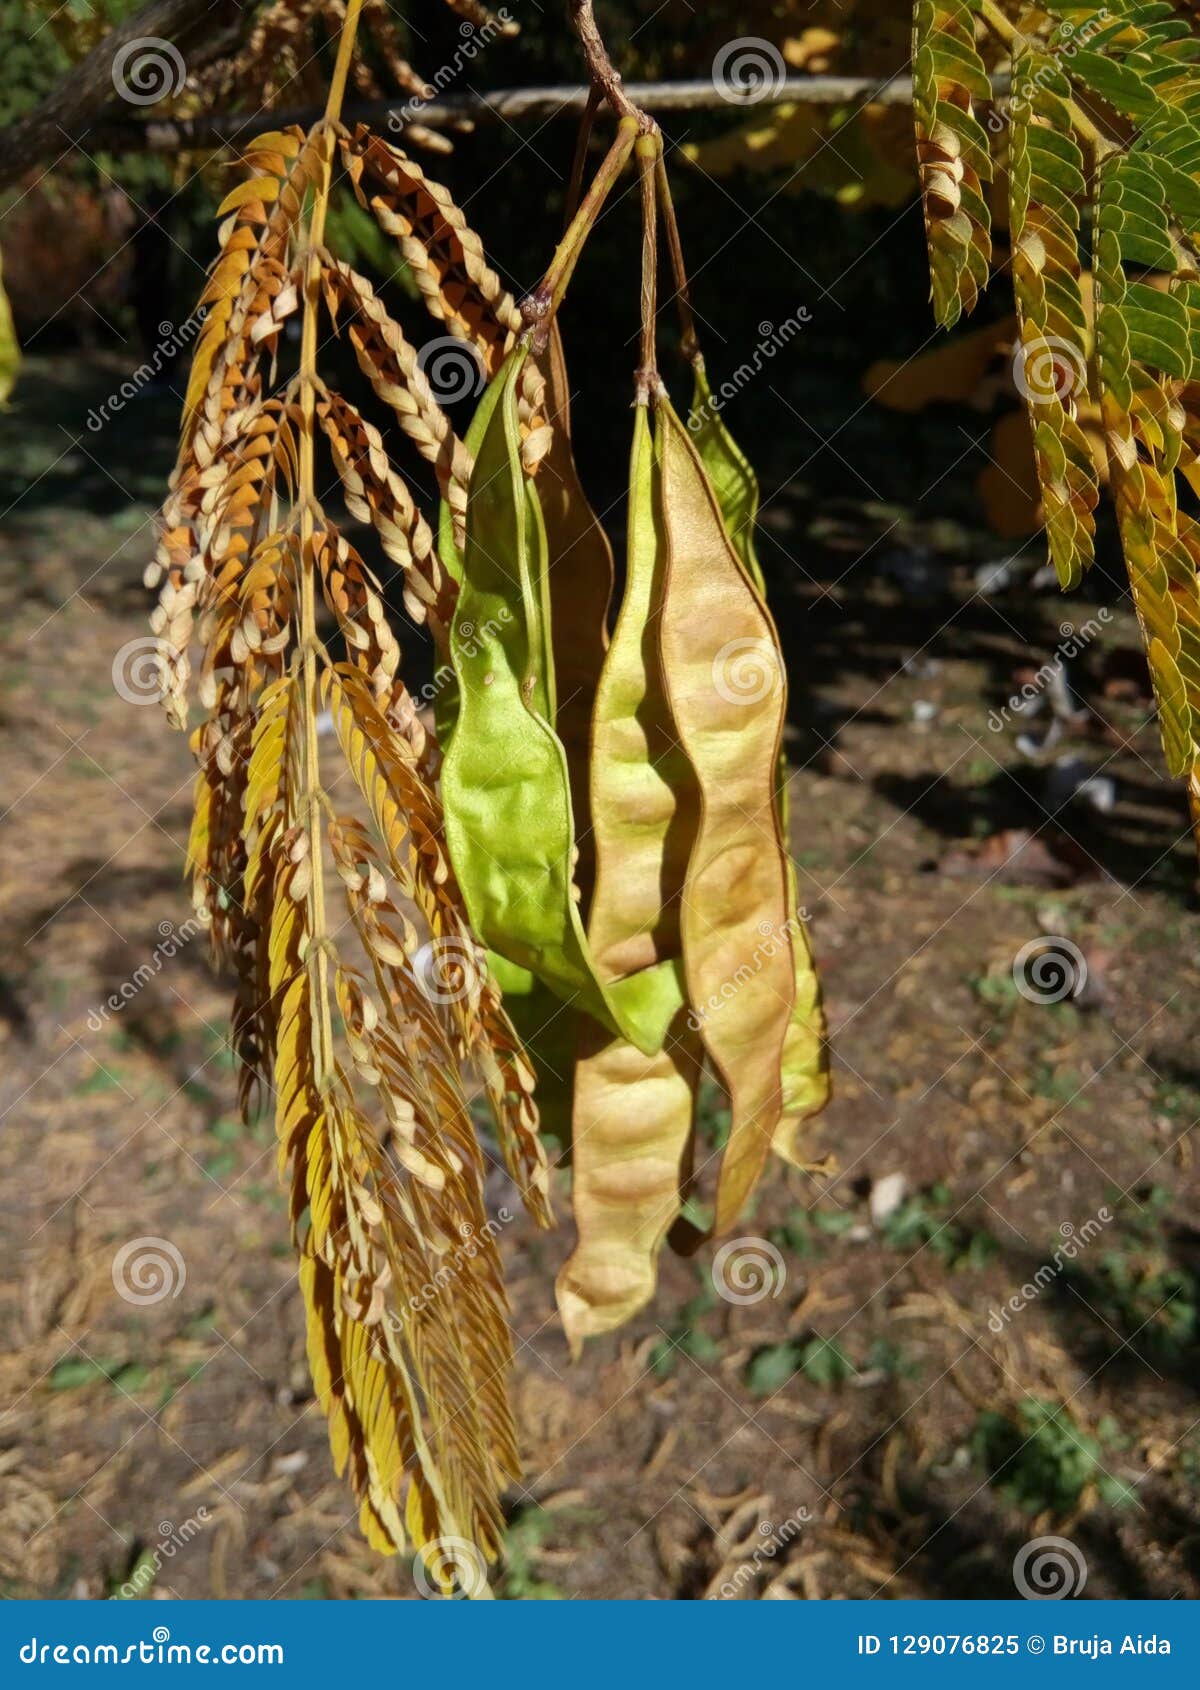 Acacia Fruit And Leaves At Botanical Garden Macea Arad County